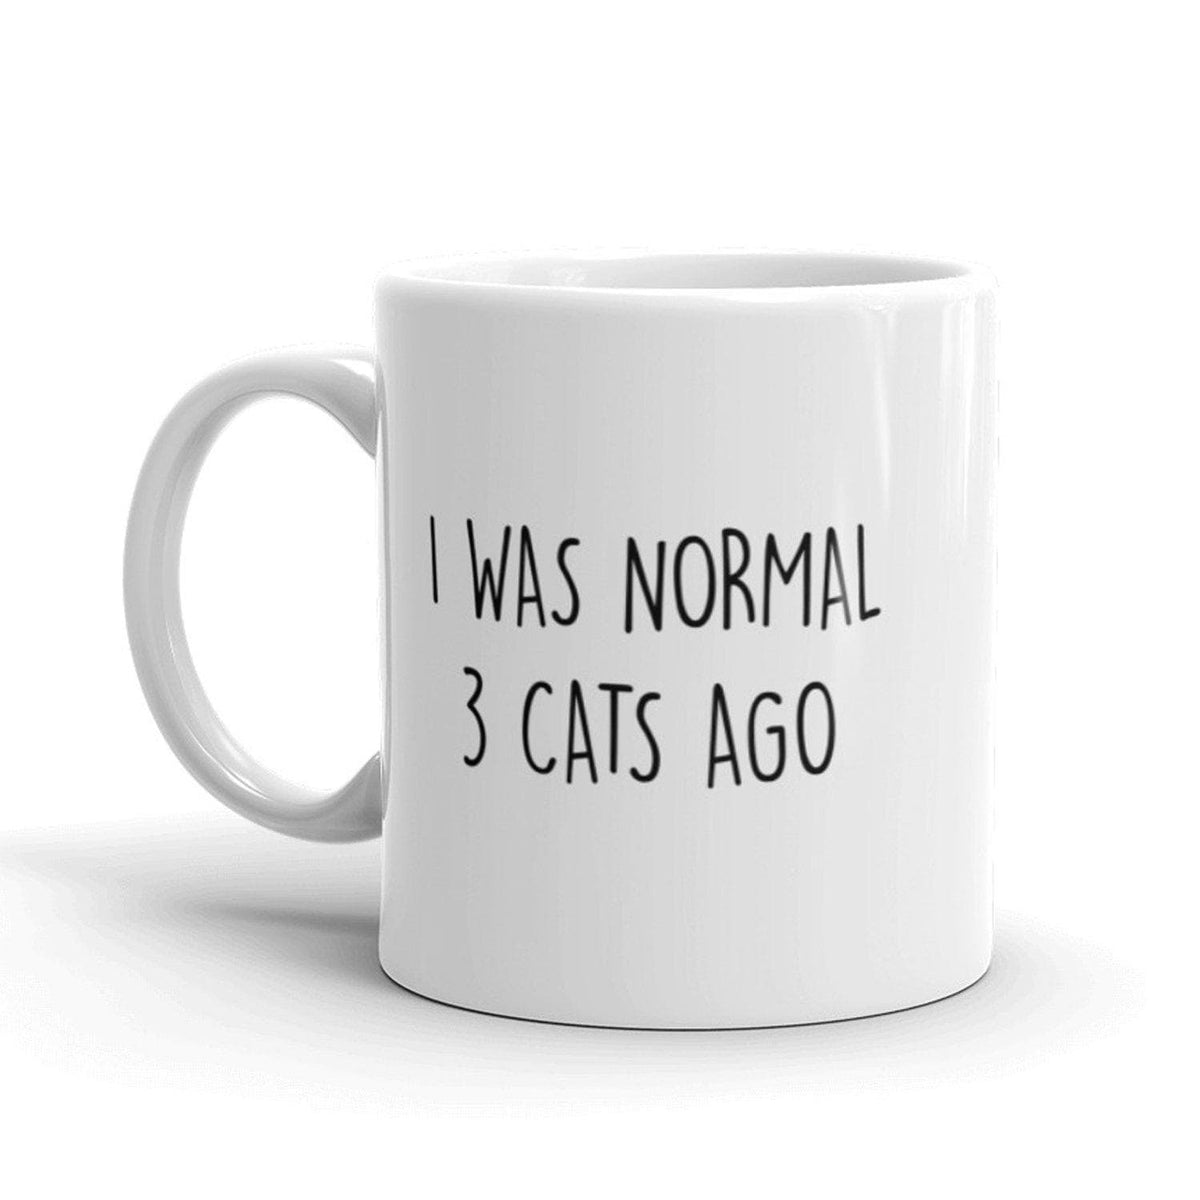 I Was Normal 3 Cats Ago Mug - Crazy Dog T-Shirts